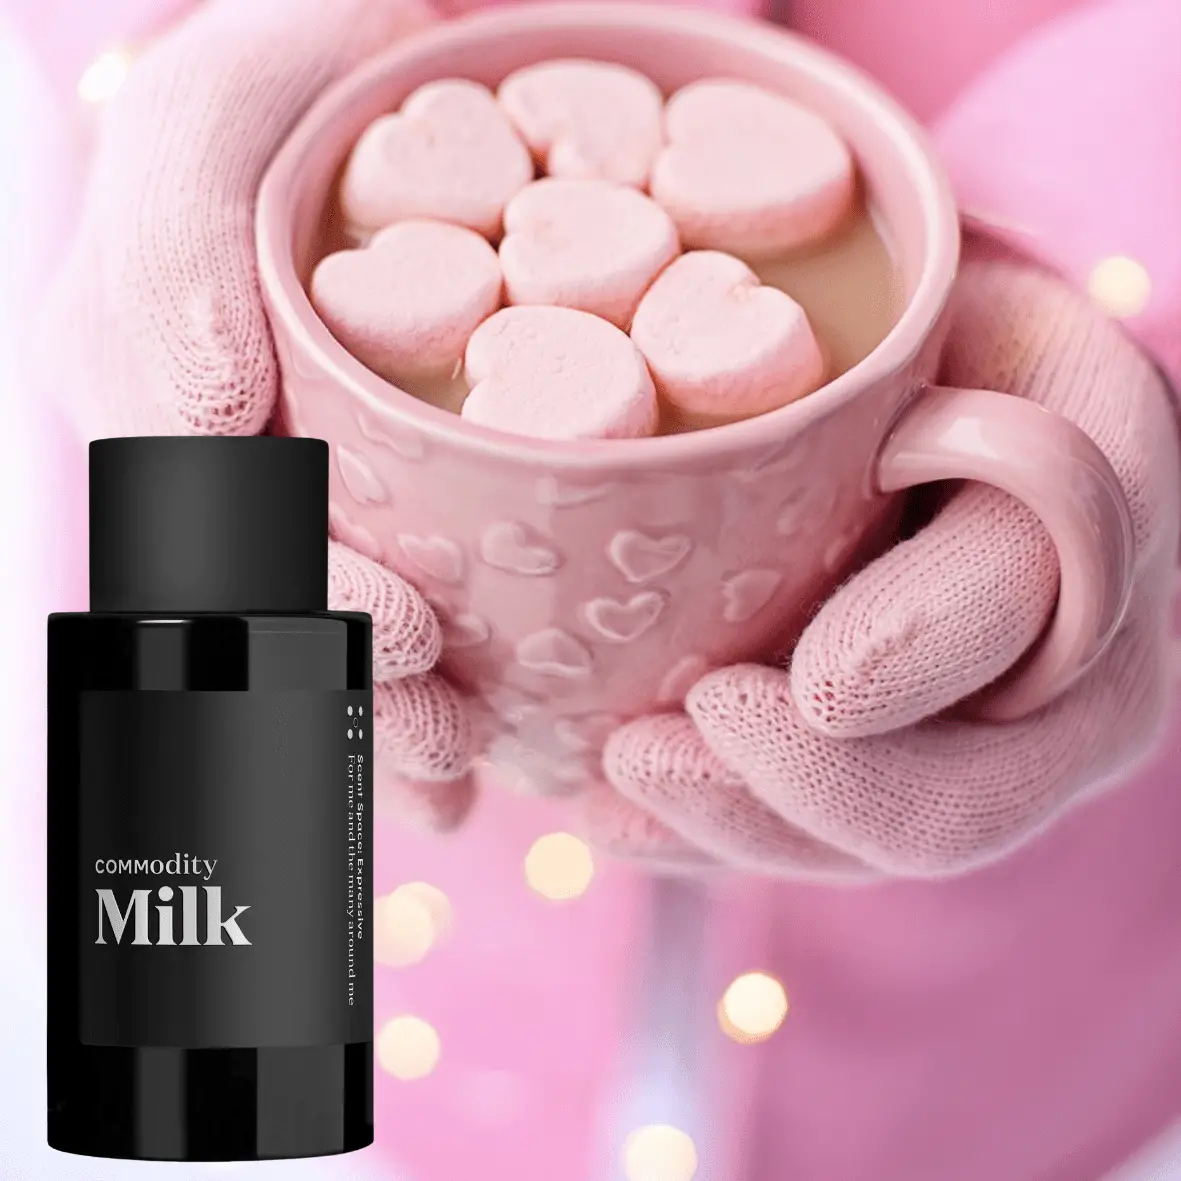 Commodity Milk
Best Marshmallow Perfumes